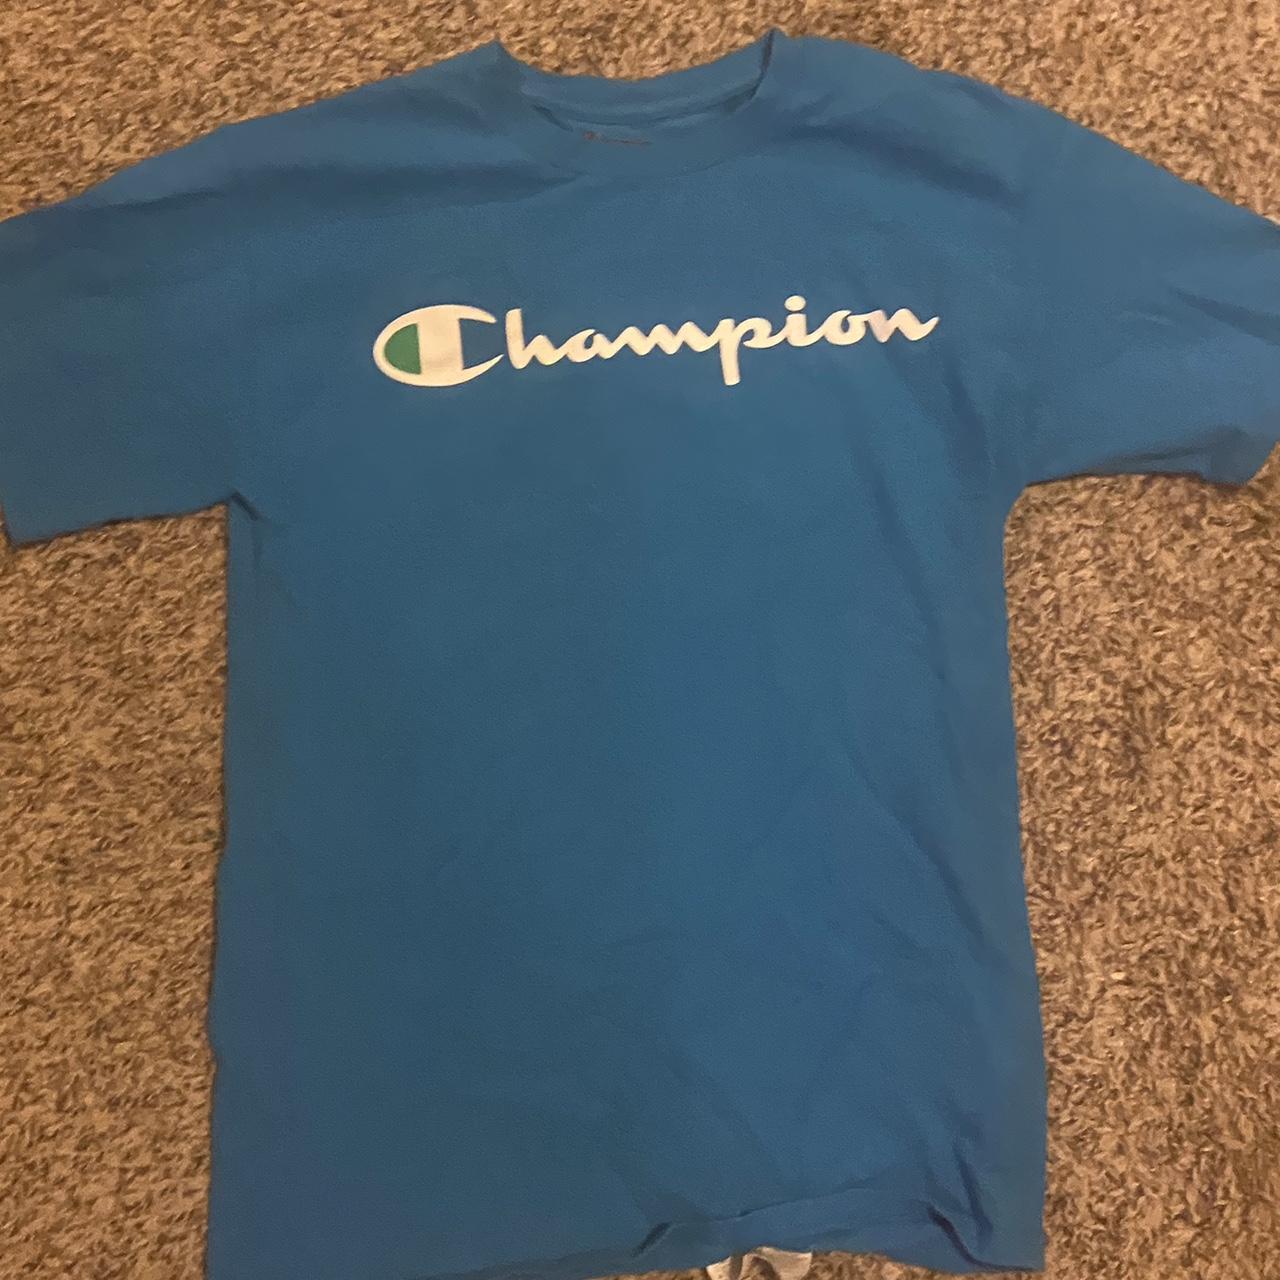 Blue champion shirt - Depop